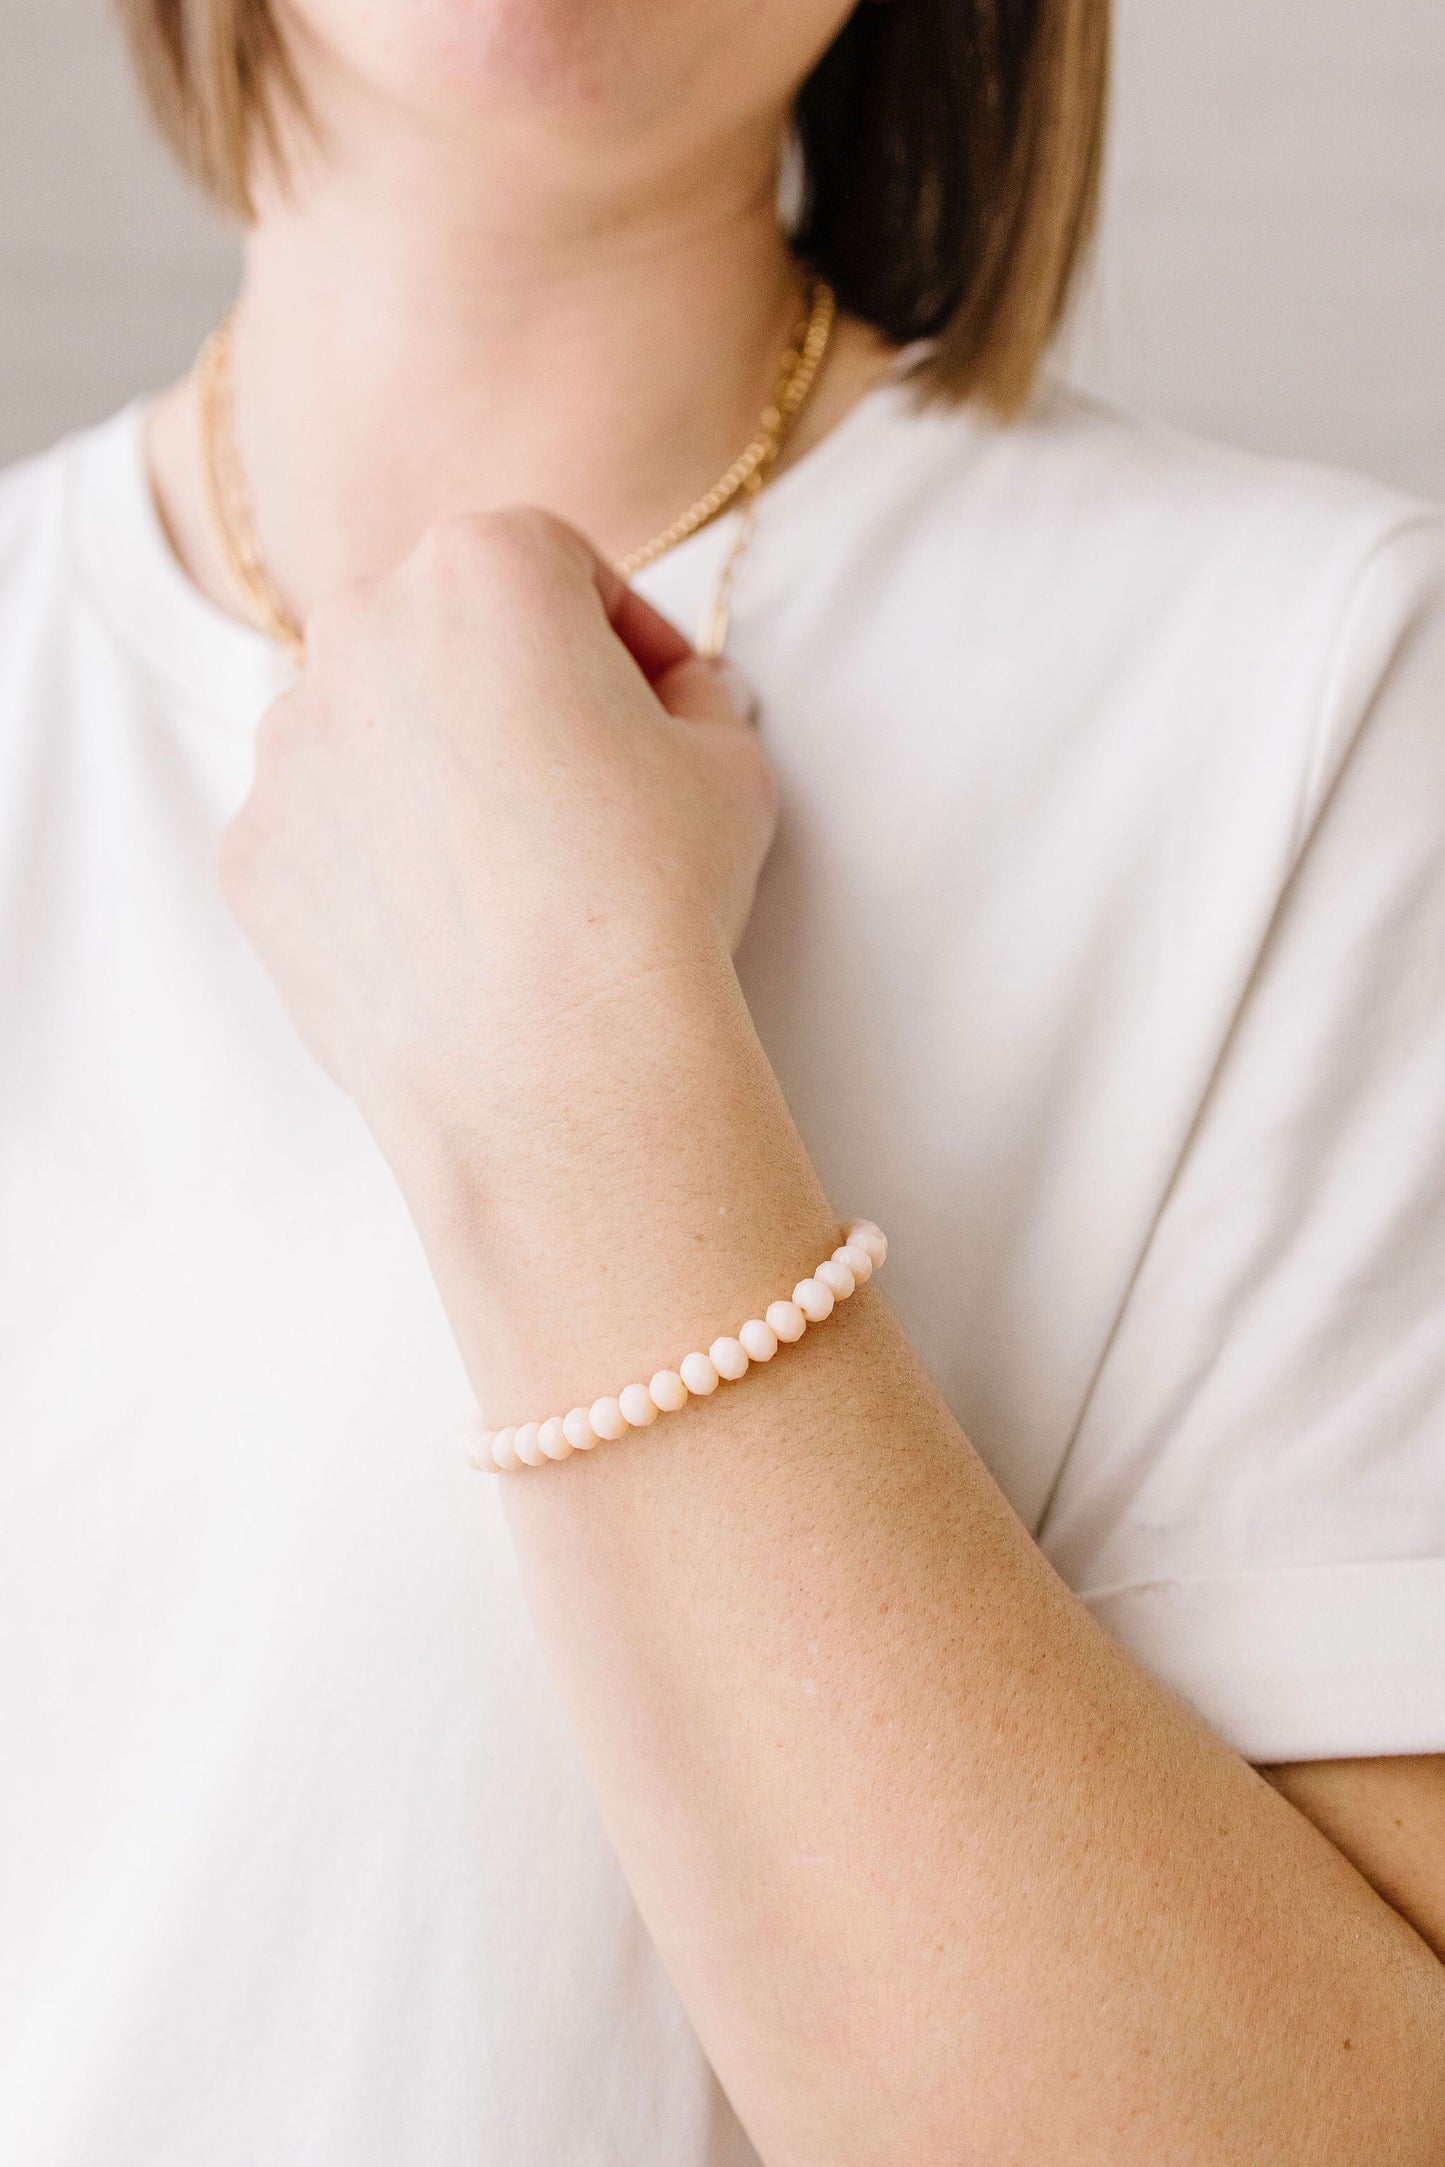 Stretchy Seashell Adult Bracelet (6MM Beads)